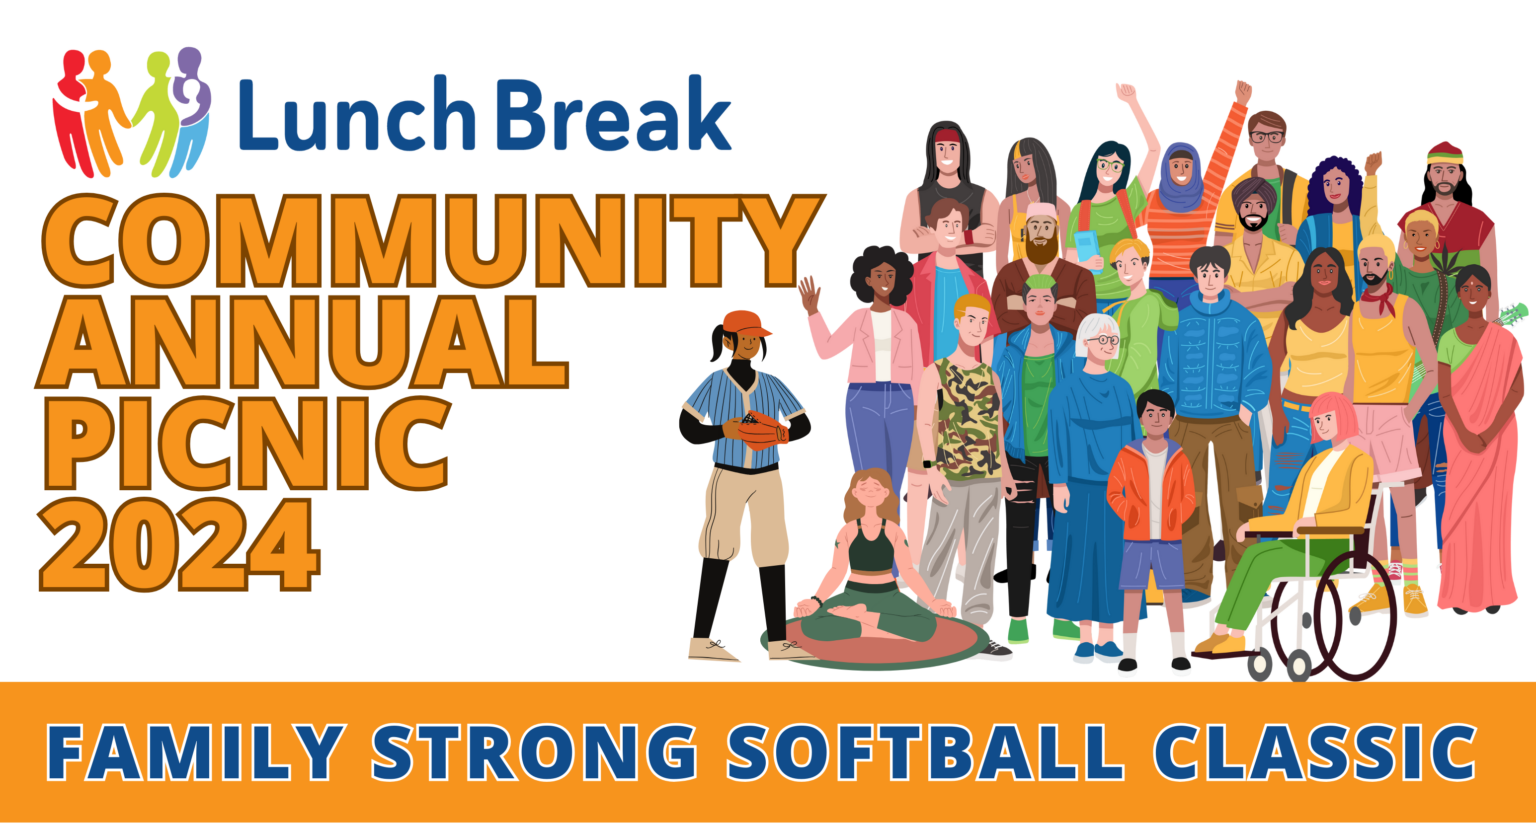 Community Annual Picnic 2024 softball poster